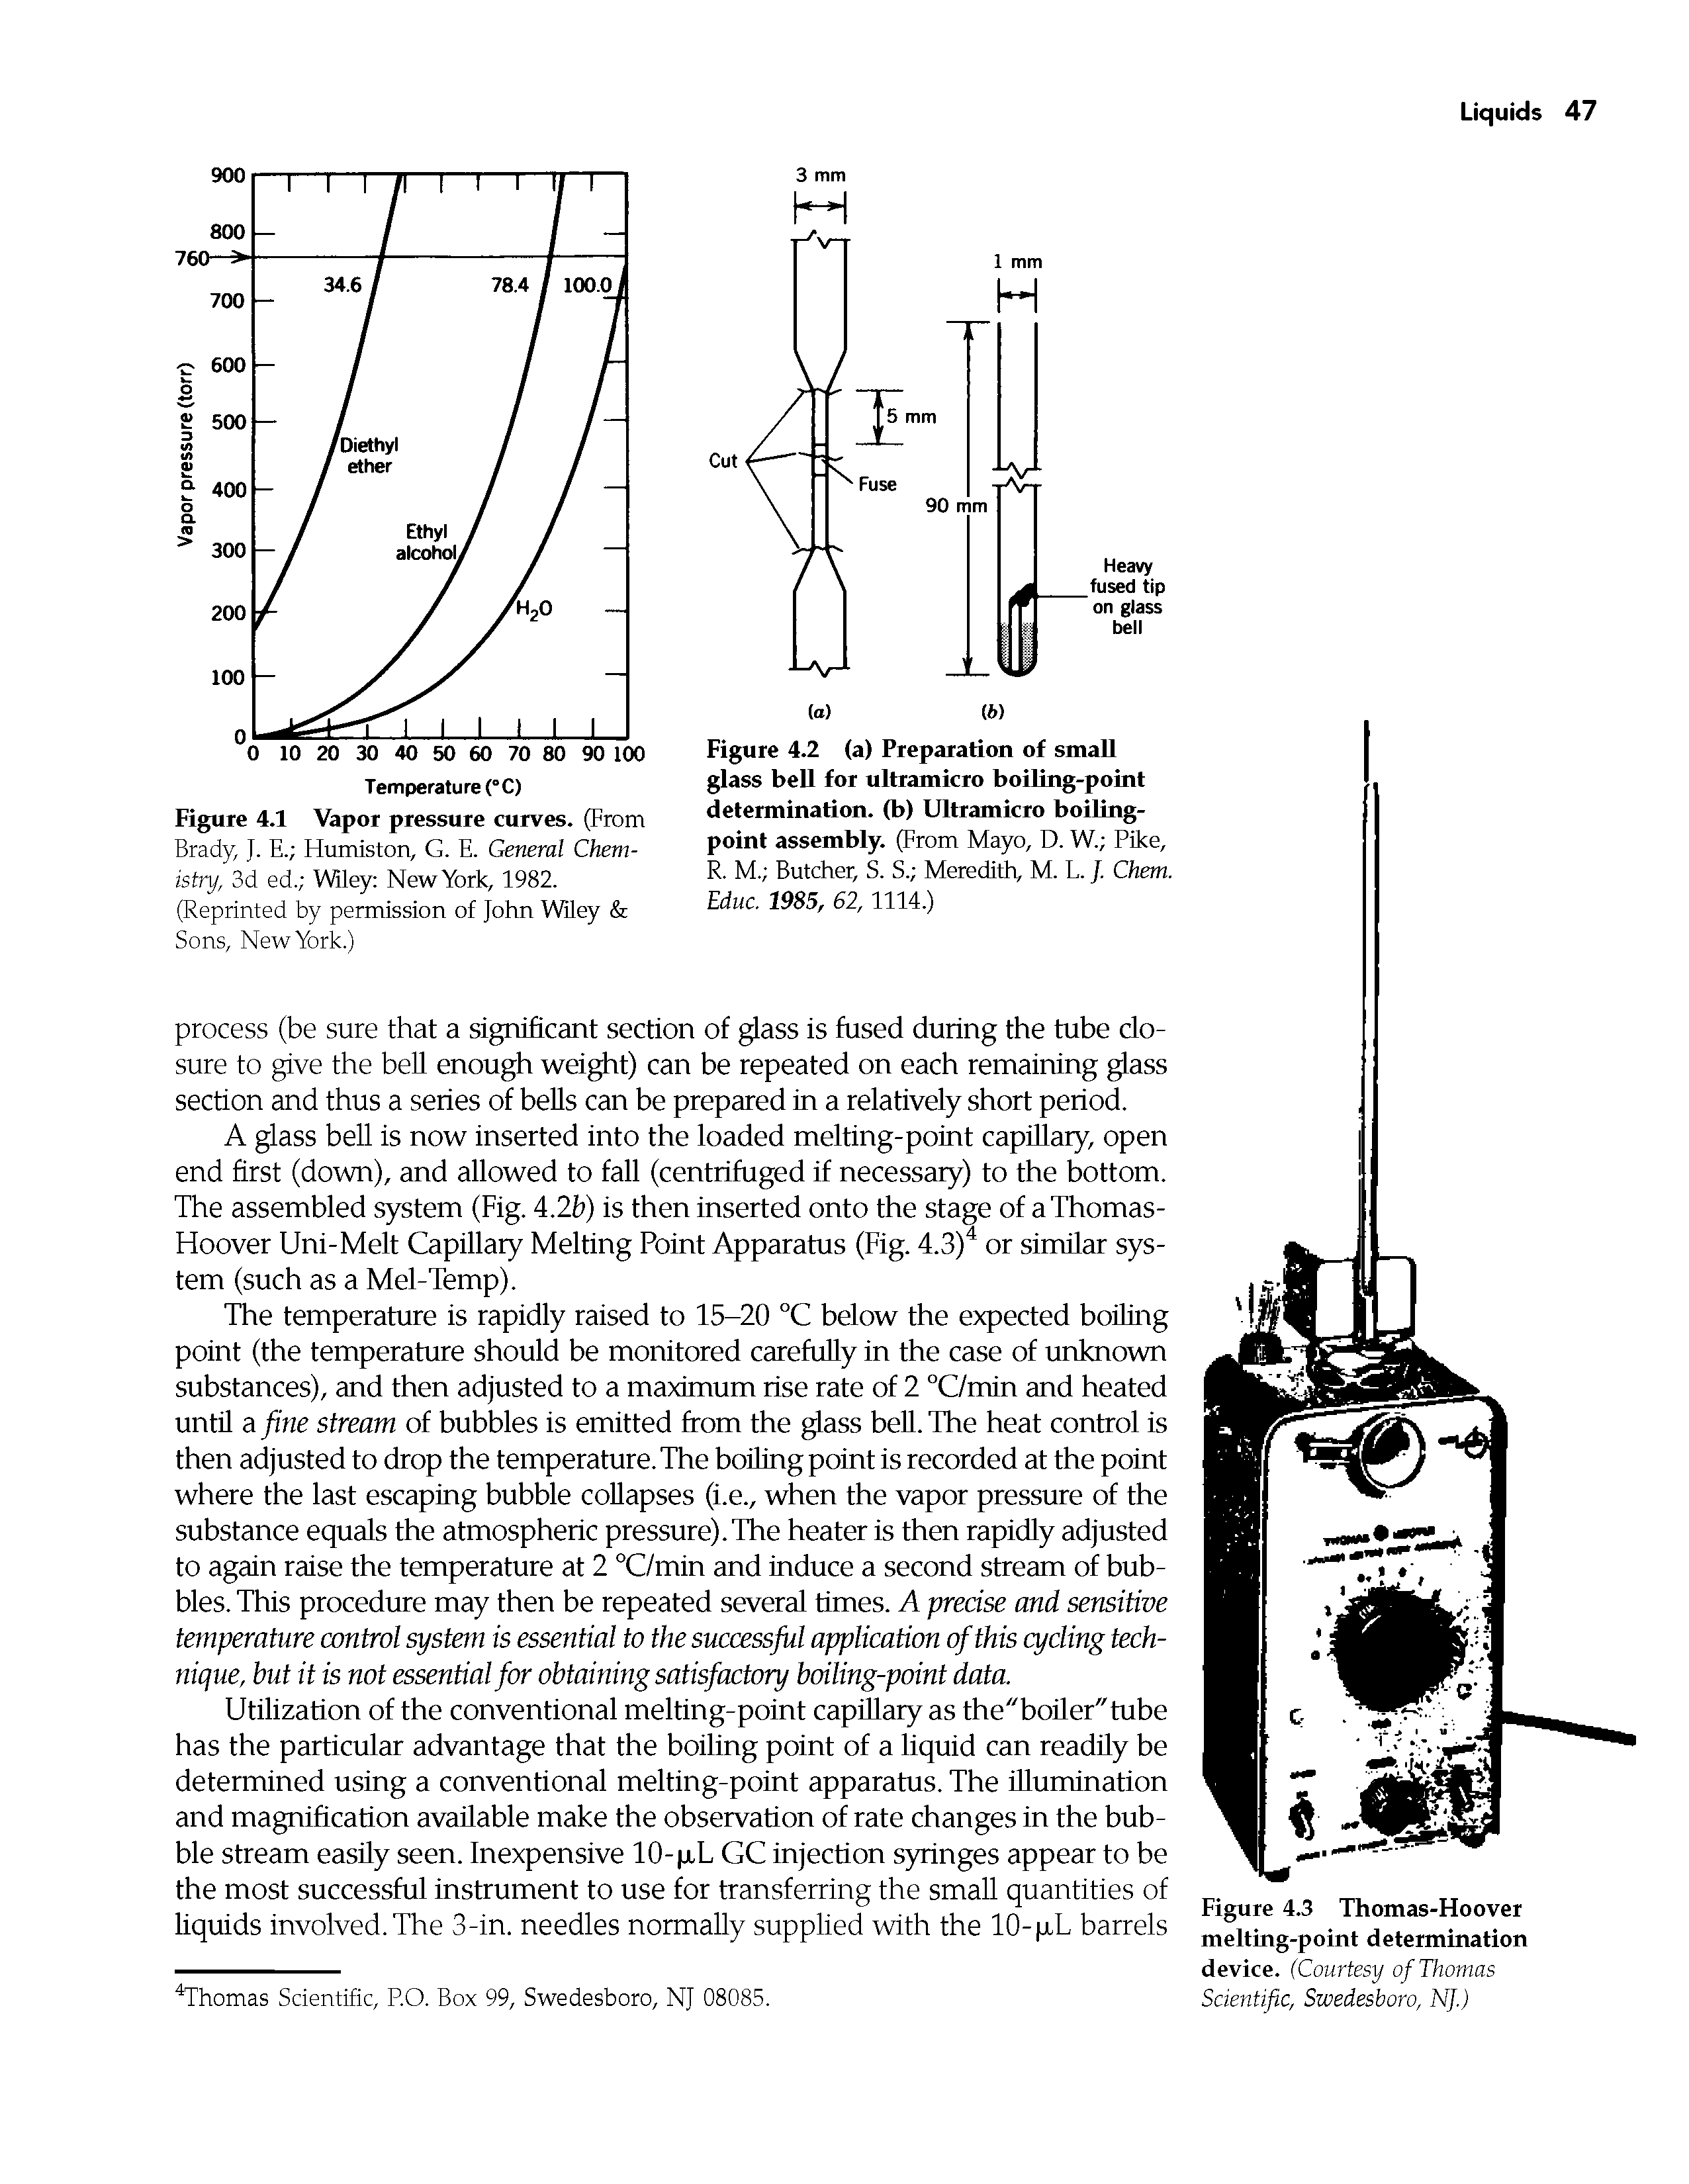 Figure 4.3 Thomas-Hoover melting-point determination device. (Courtesy of Thomas Scientific, Swedesboro, N. )...